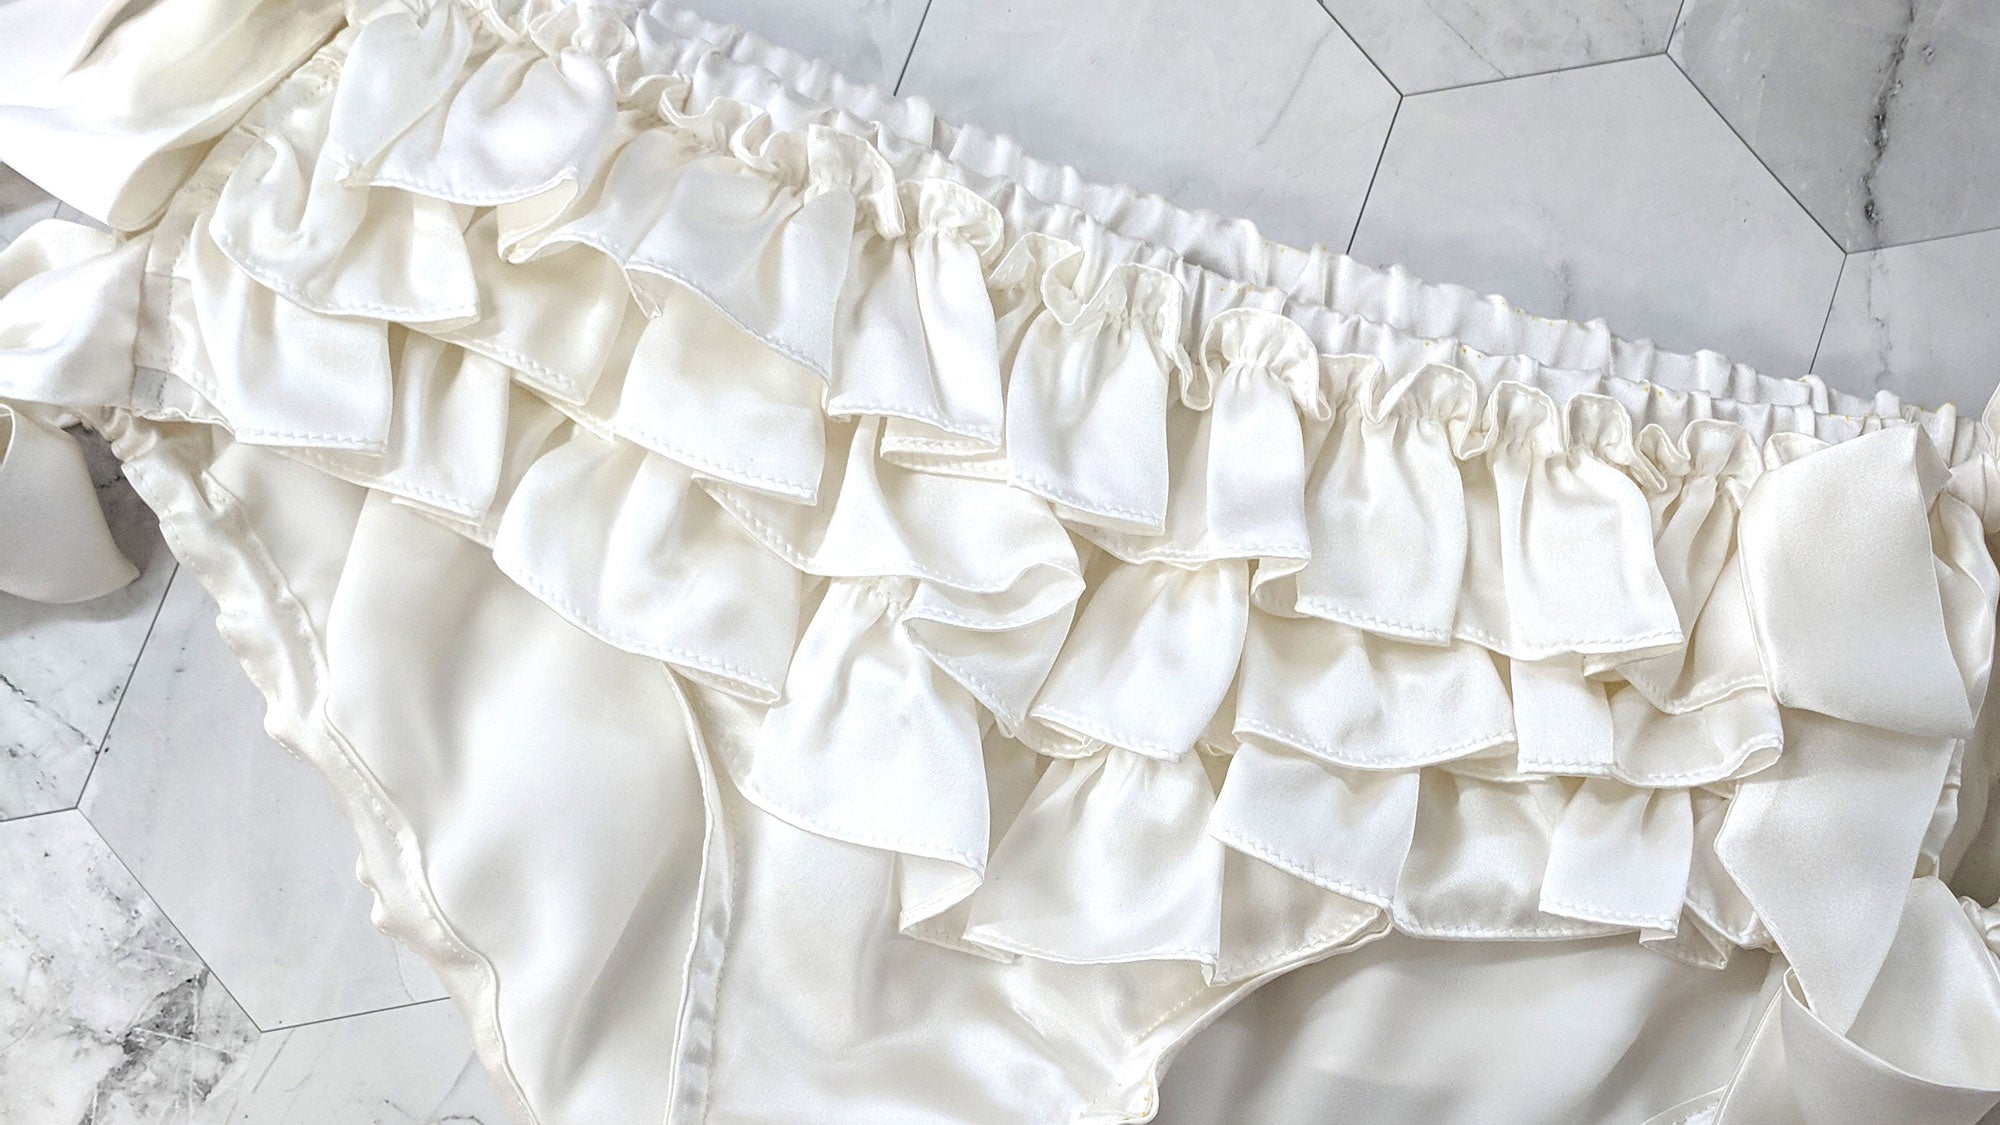 Silk ruffle panties in white satin